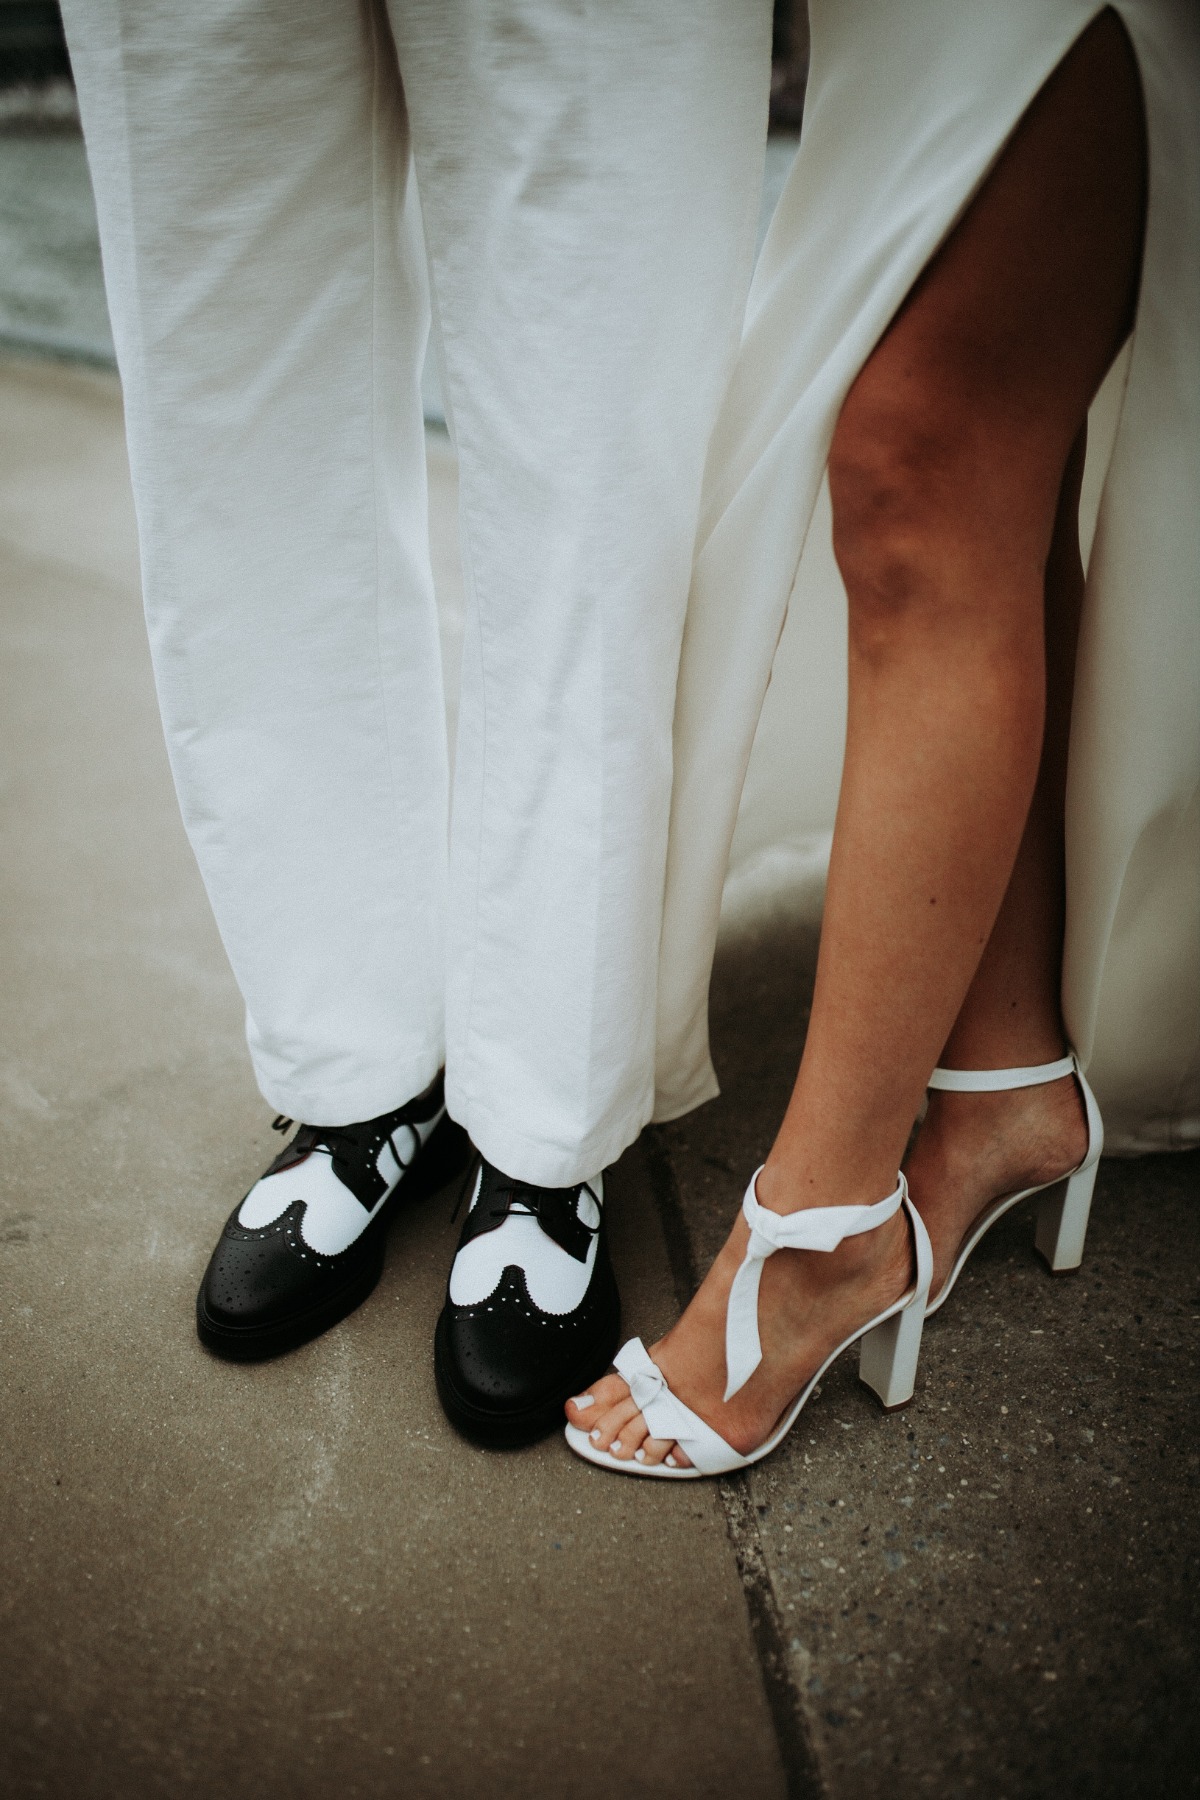 Vintage bride and groom shoes